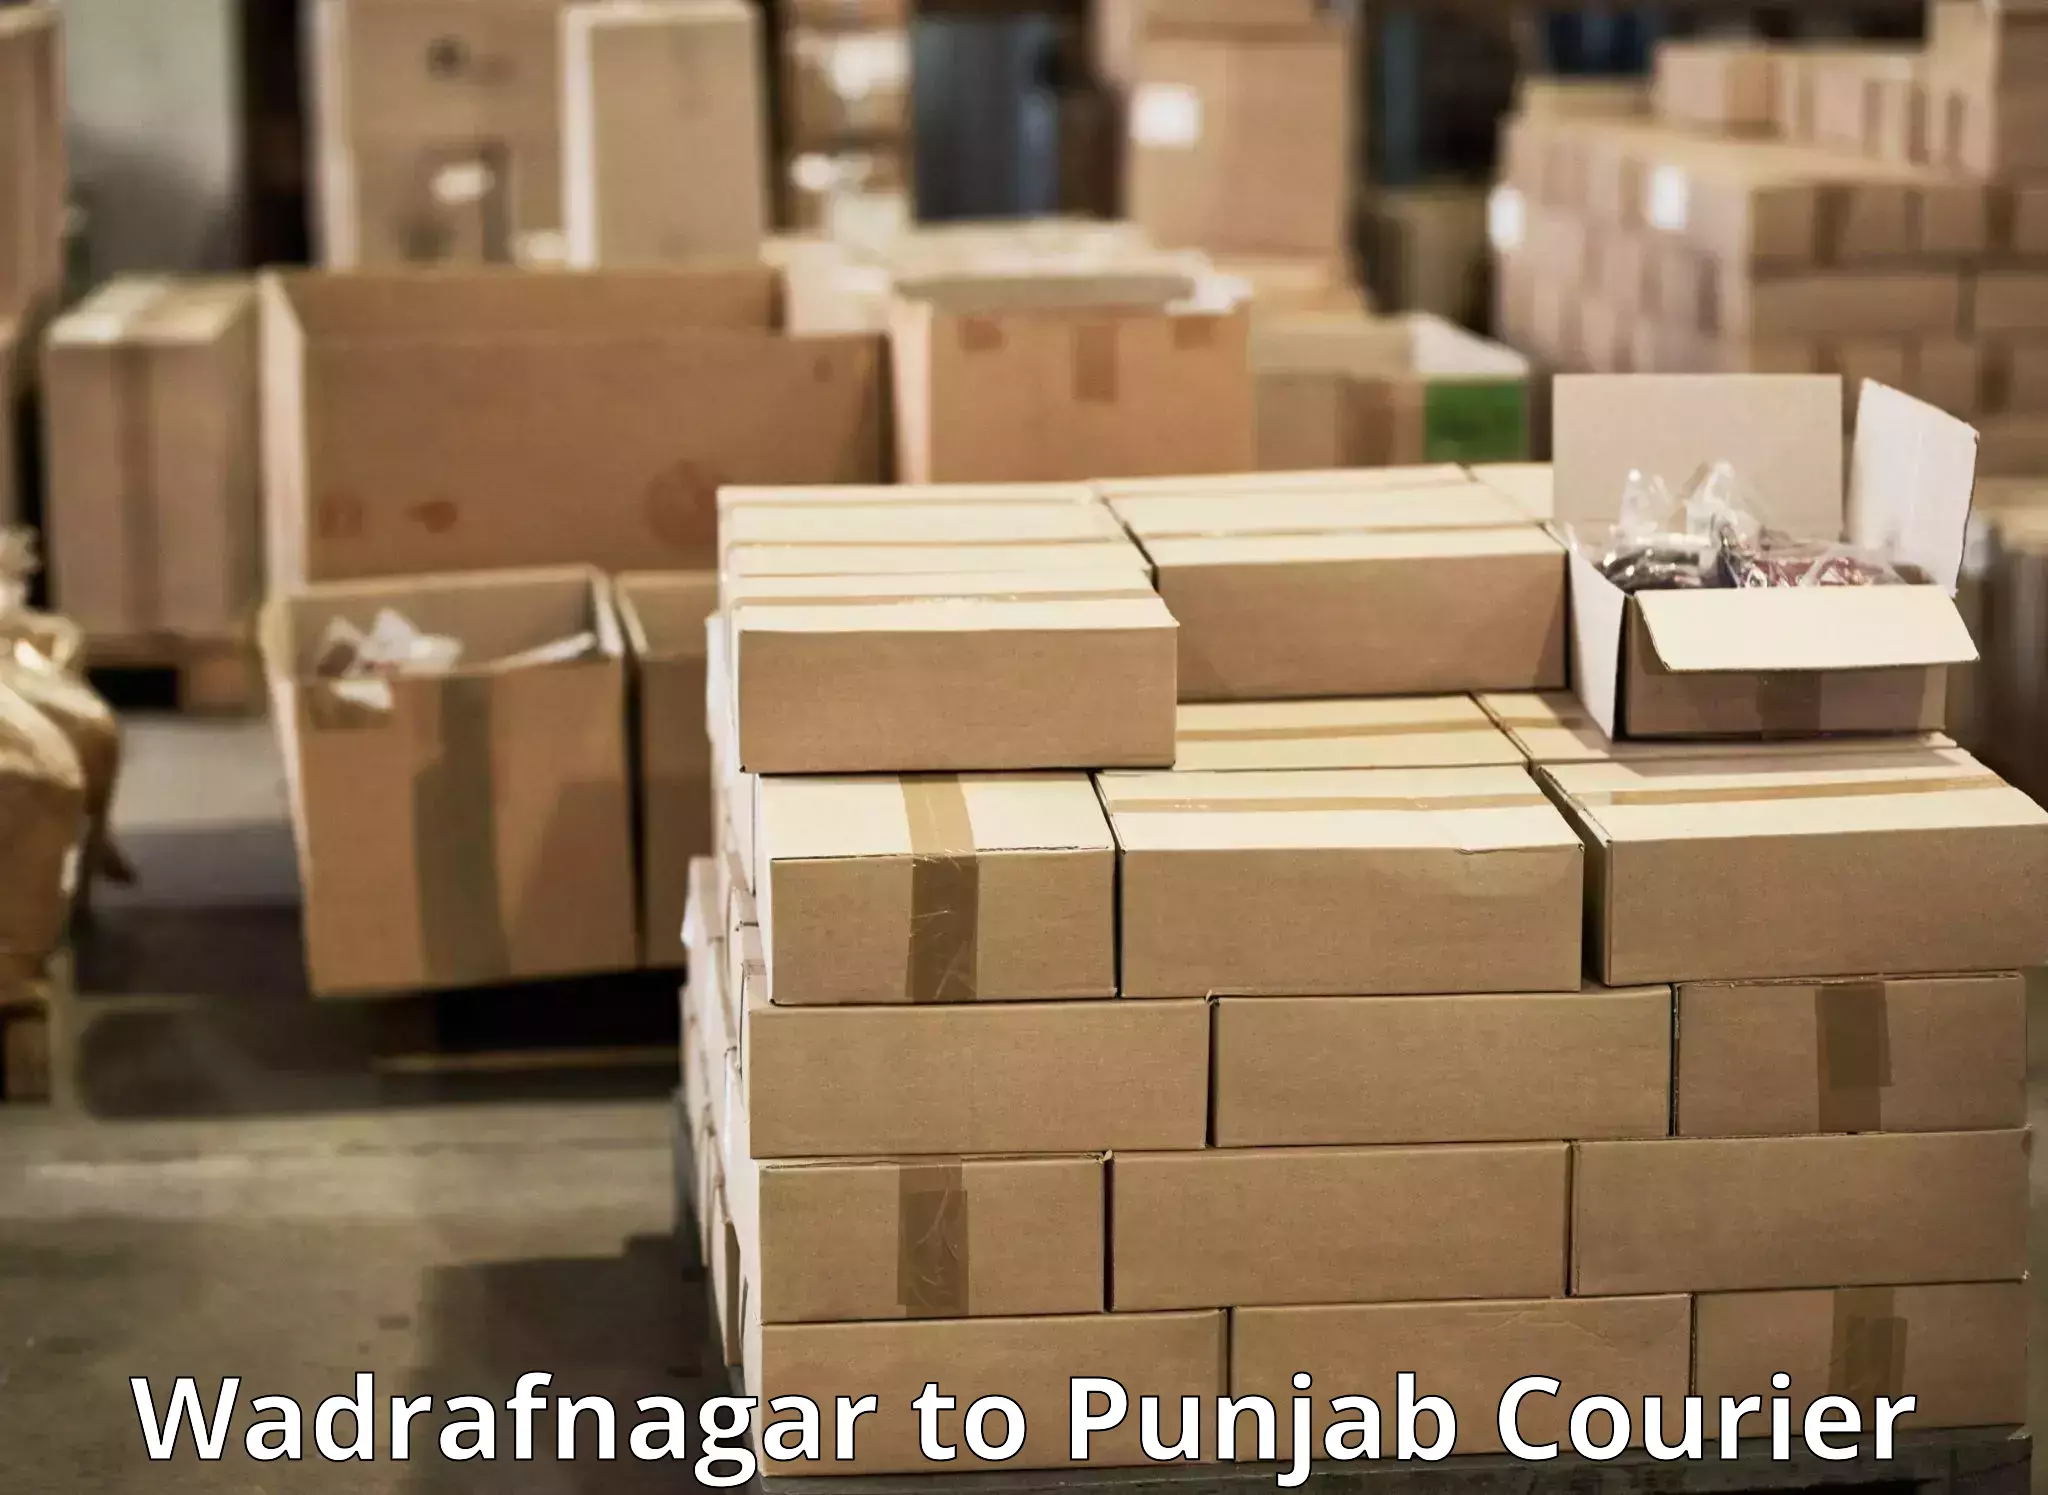 On-call courier service Wadrafnagar to Punjab